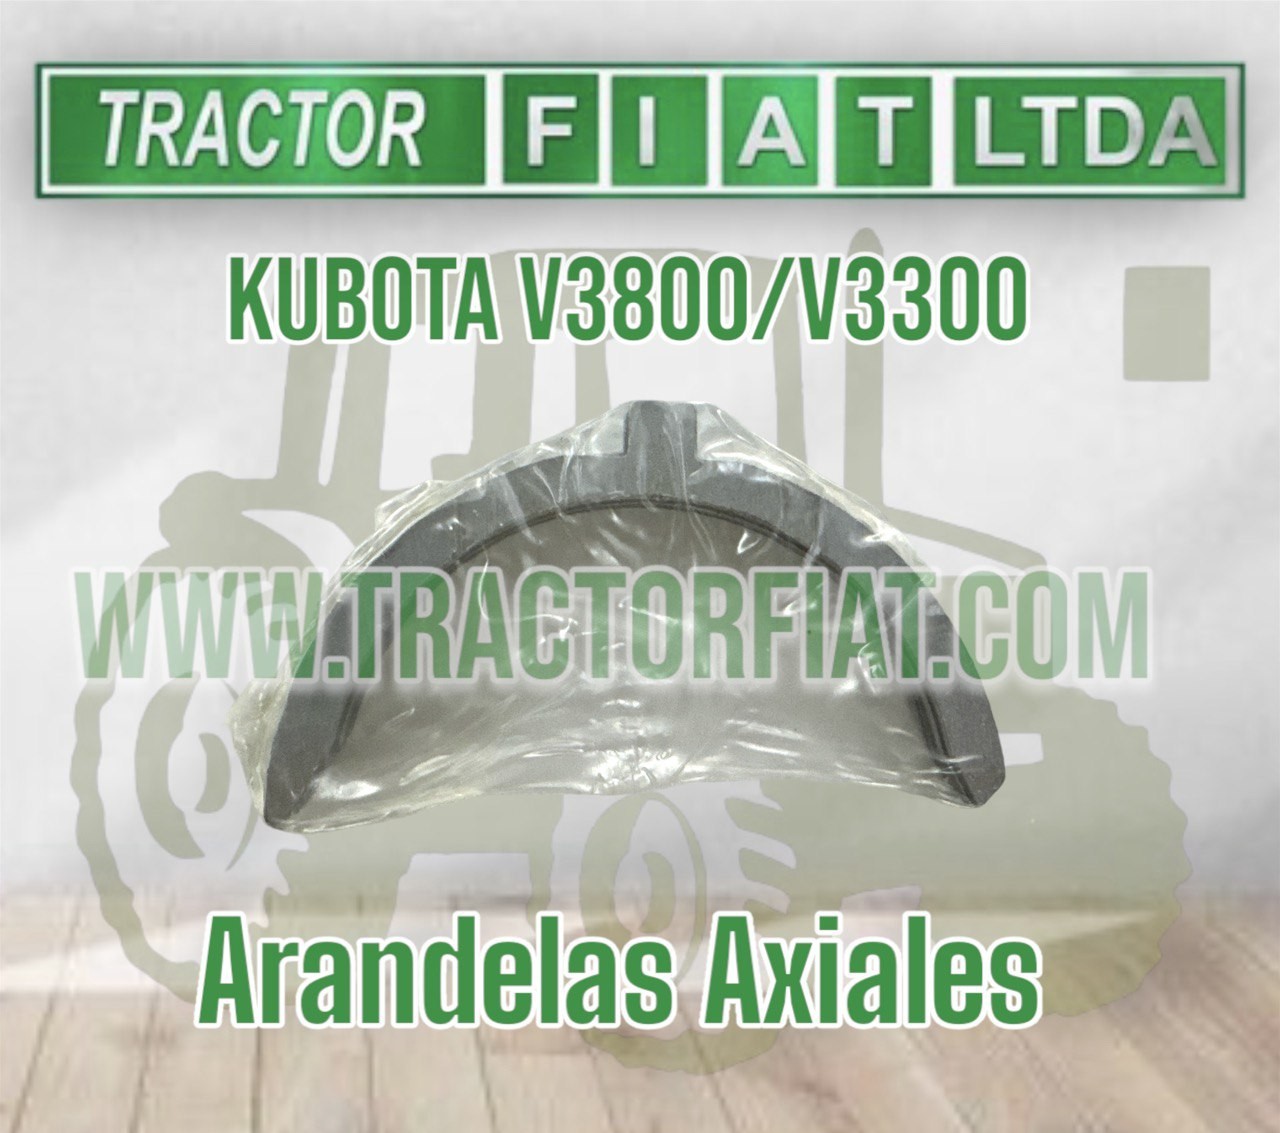 ARANDELAS AXIALES -MOTOR KUBOTA V3800 / V3300